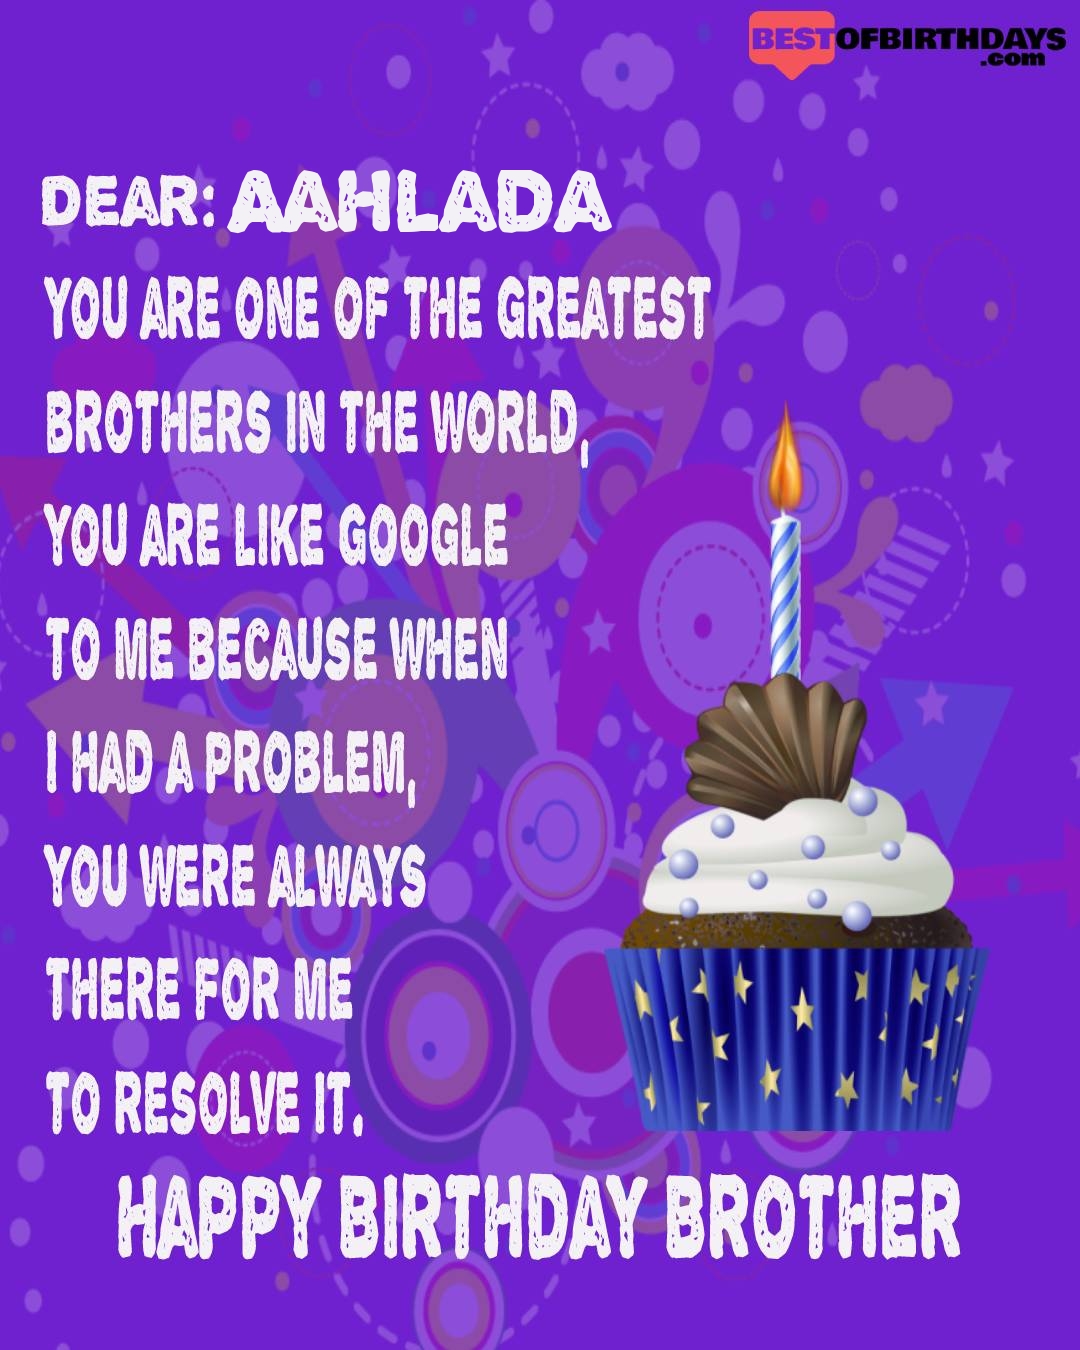 Happy birthday aahlada bhai brother bro